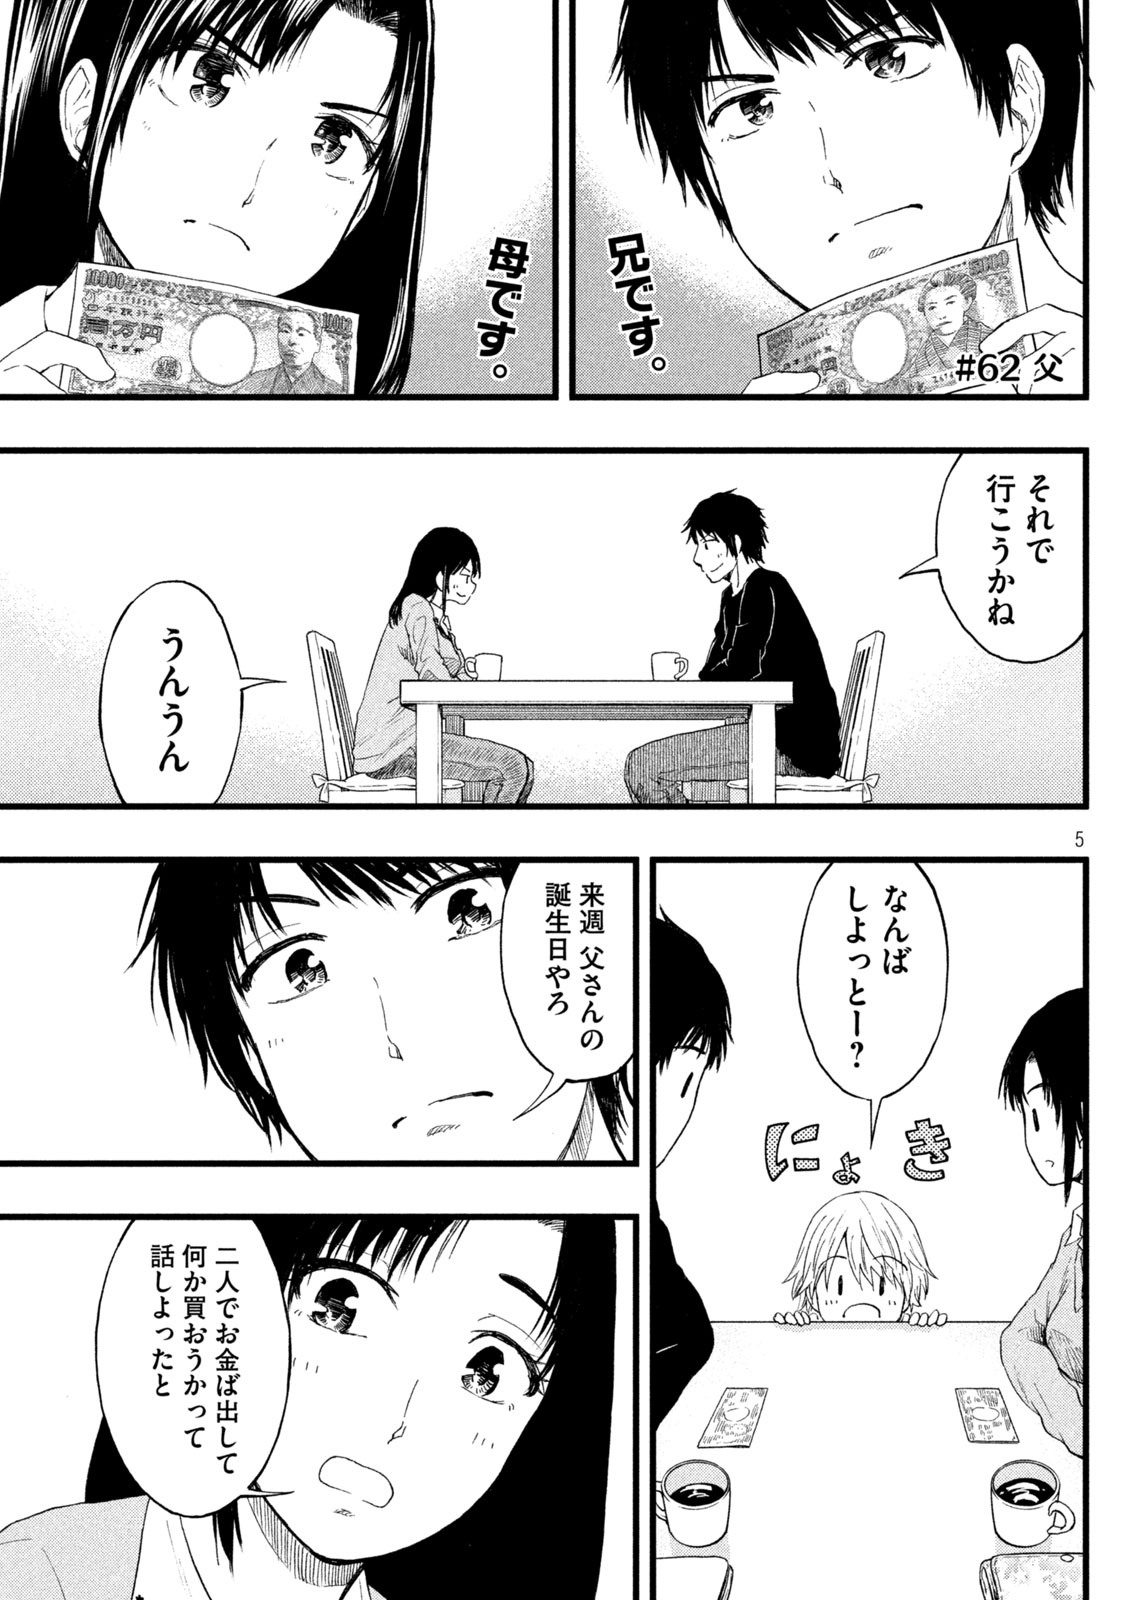 Koharu haru! - Chapter 62 - Page 1